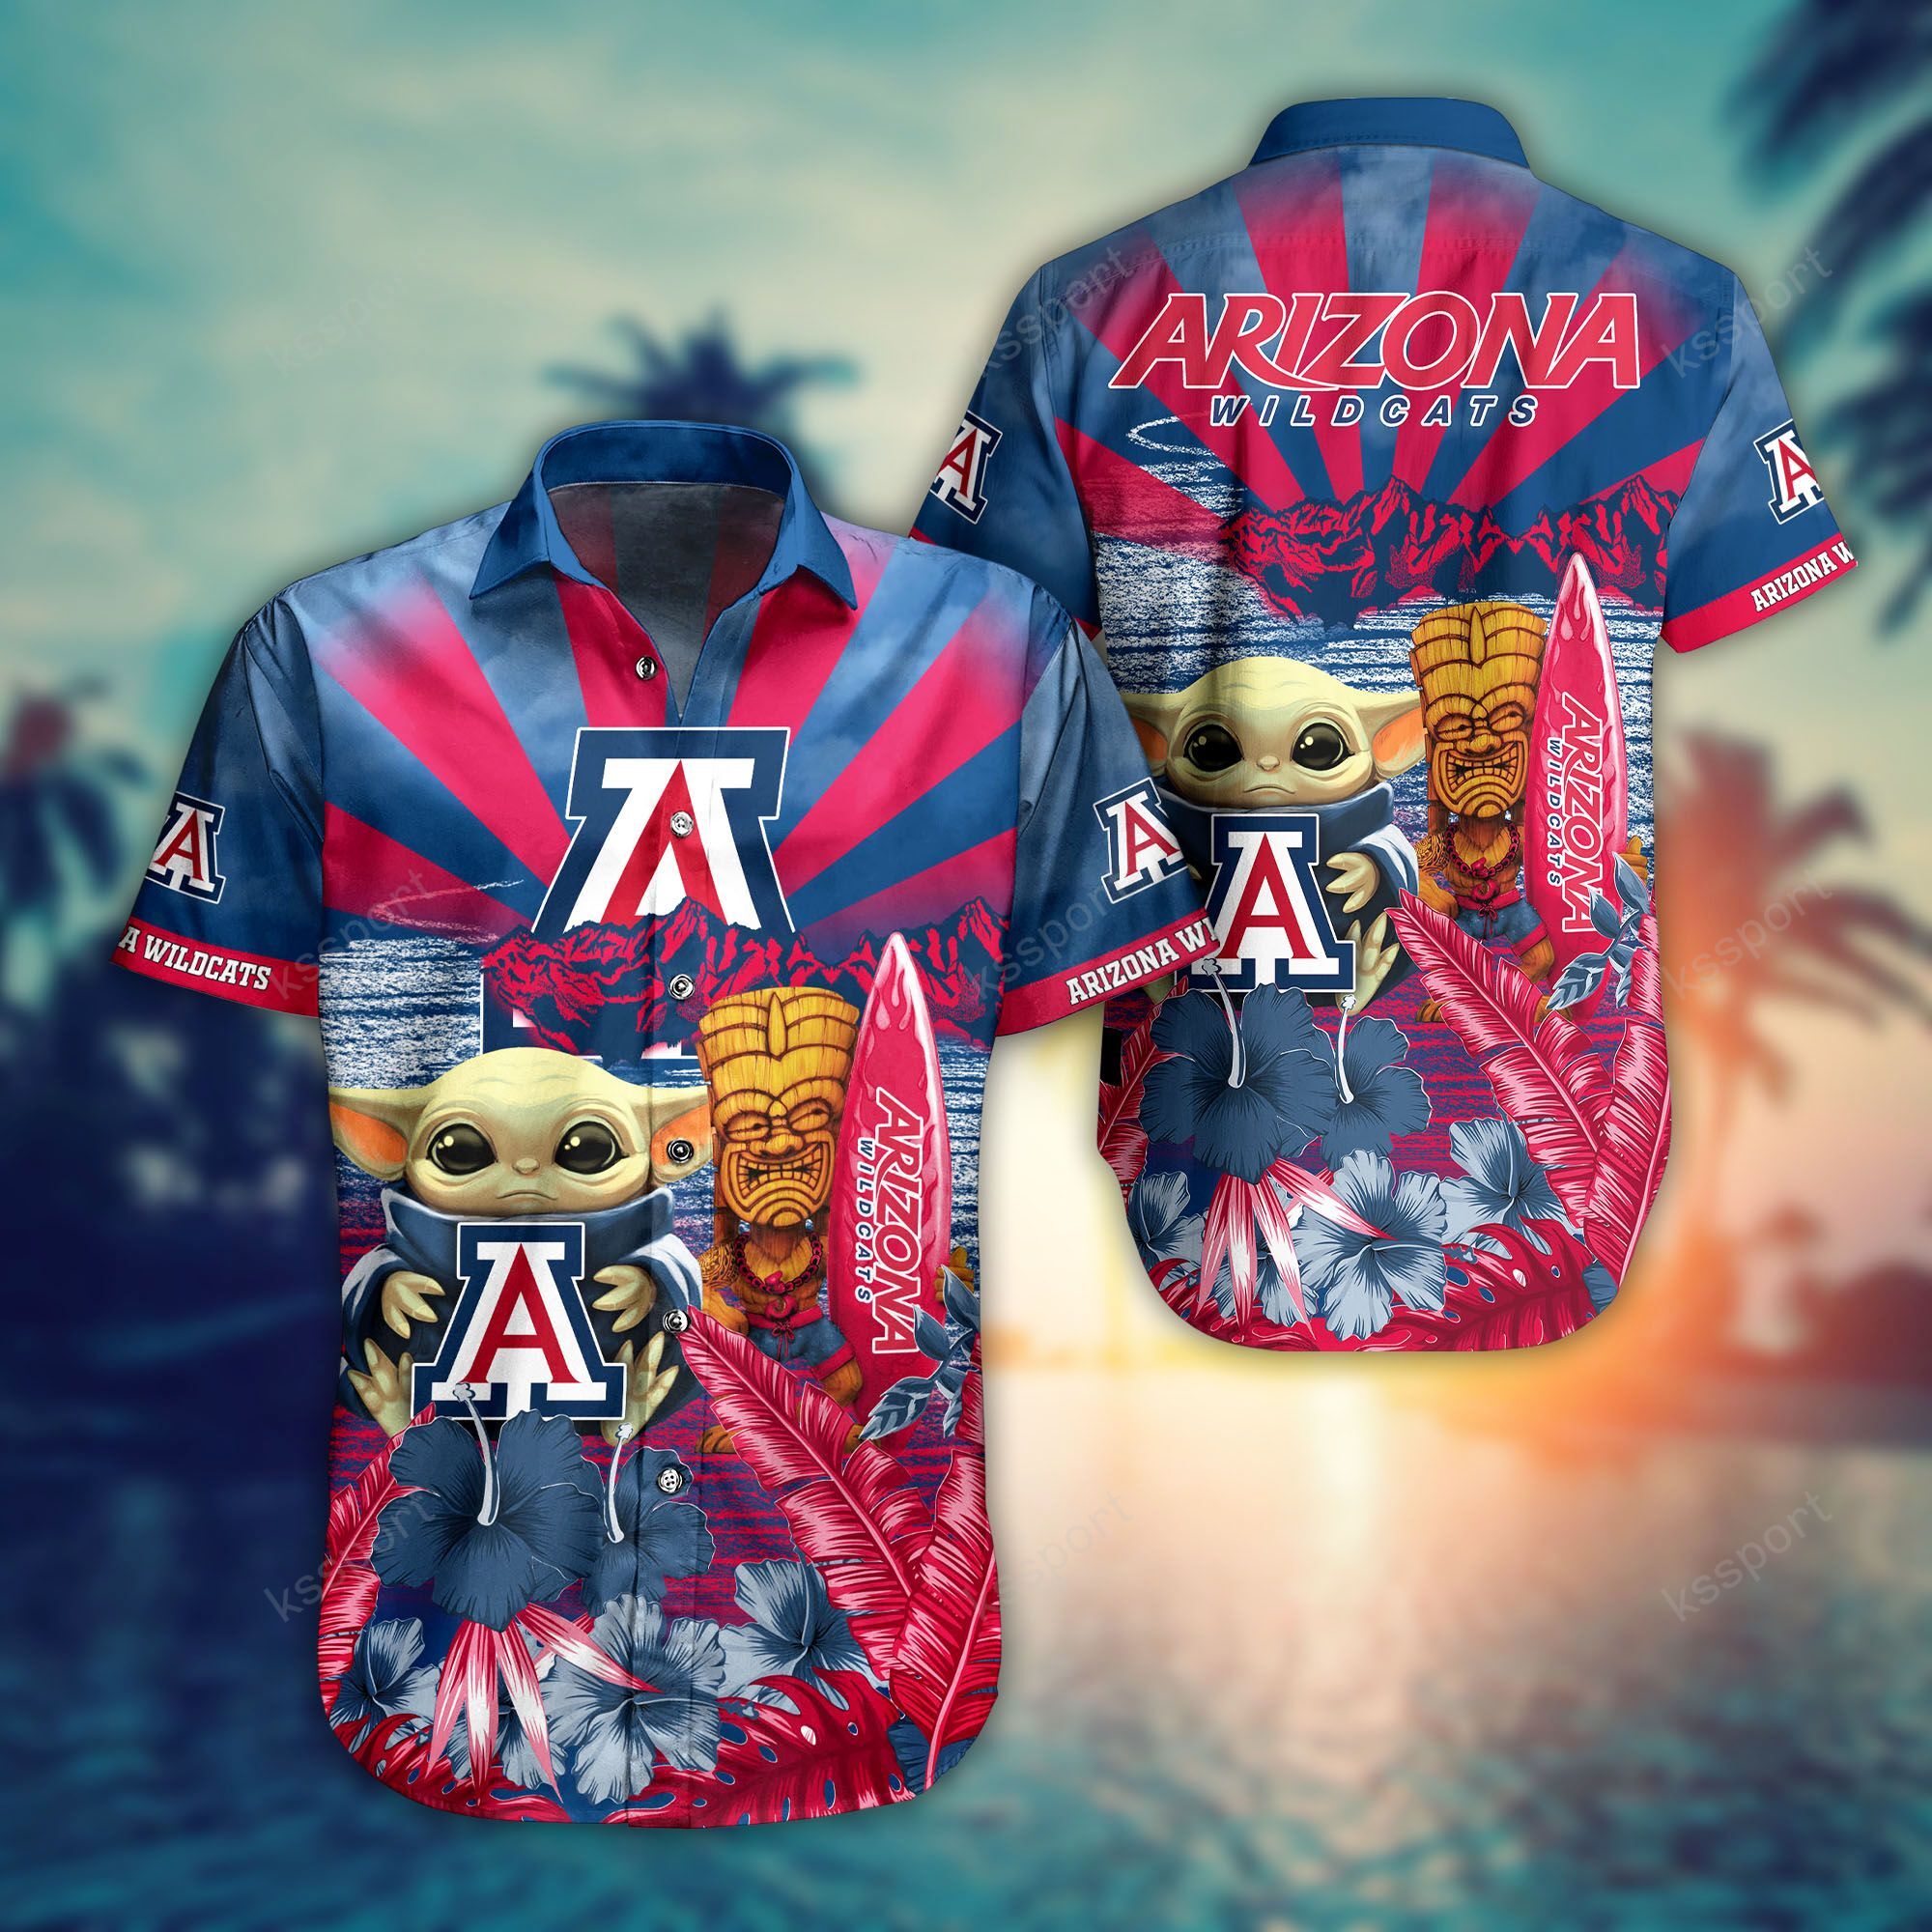 Order Hawaiian shirts to wear on your vacation 4